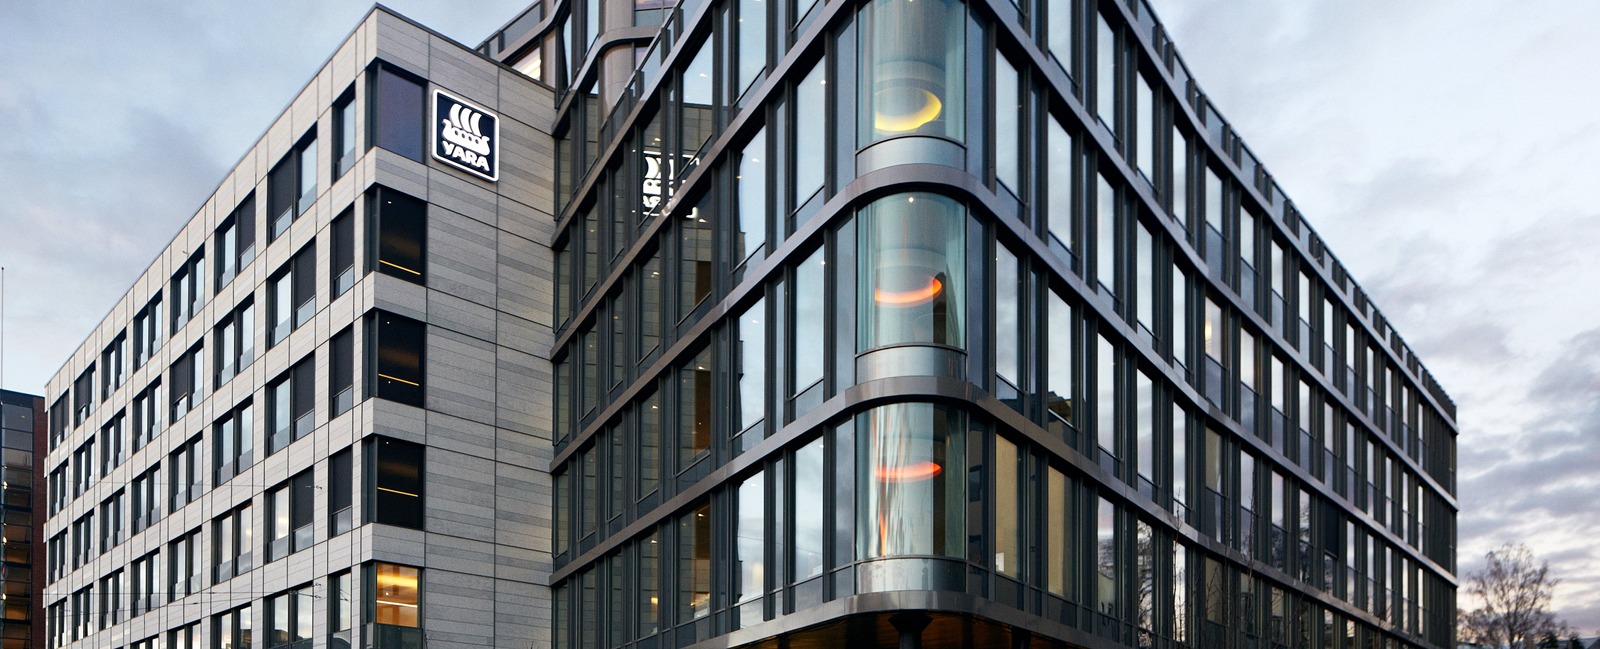 Yara building in Oslo